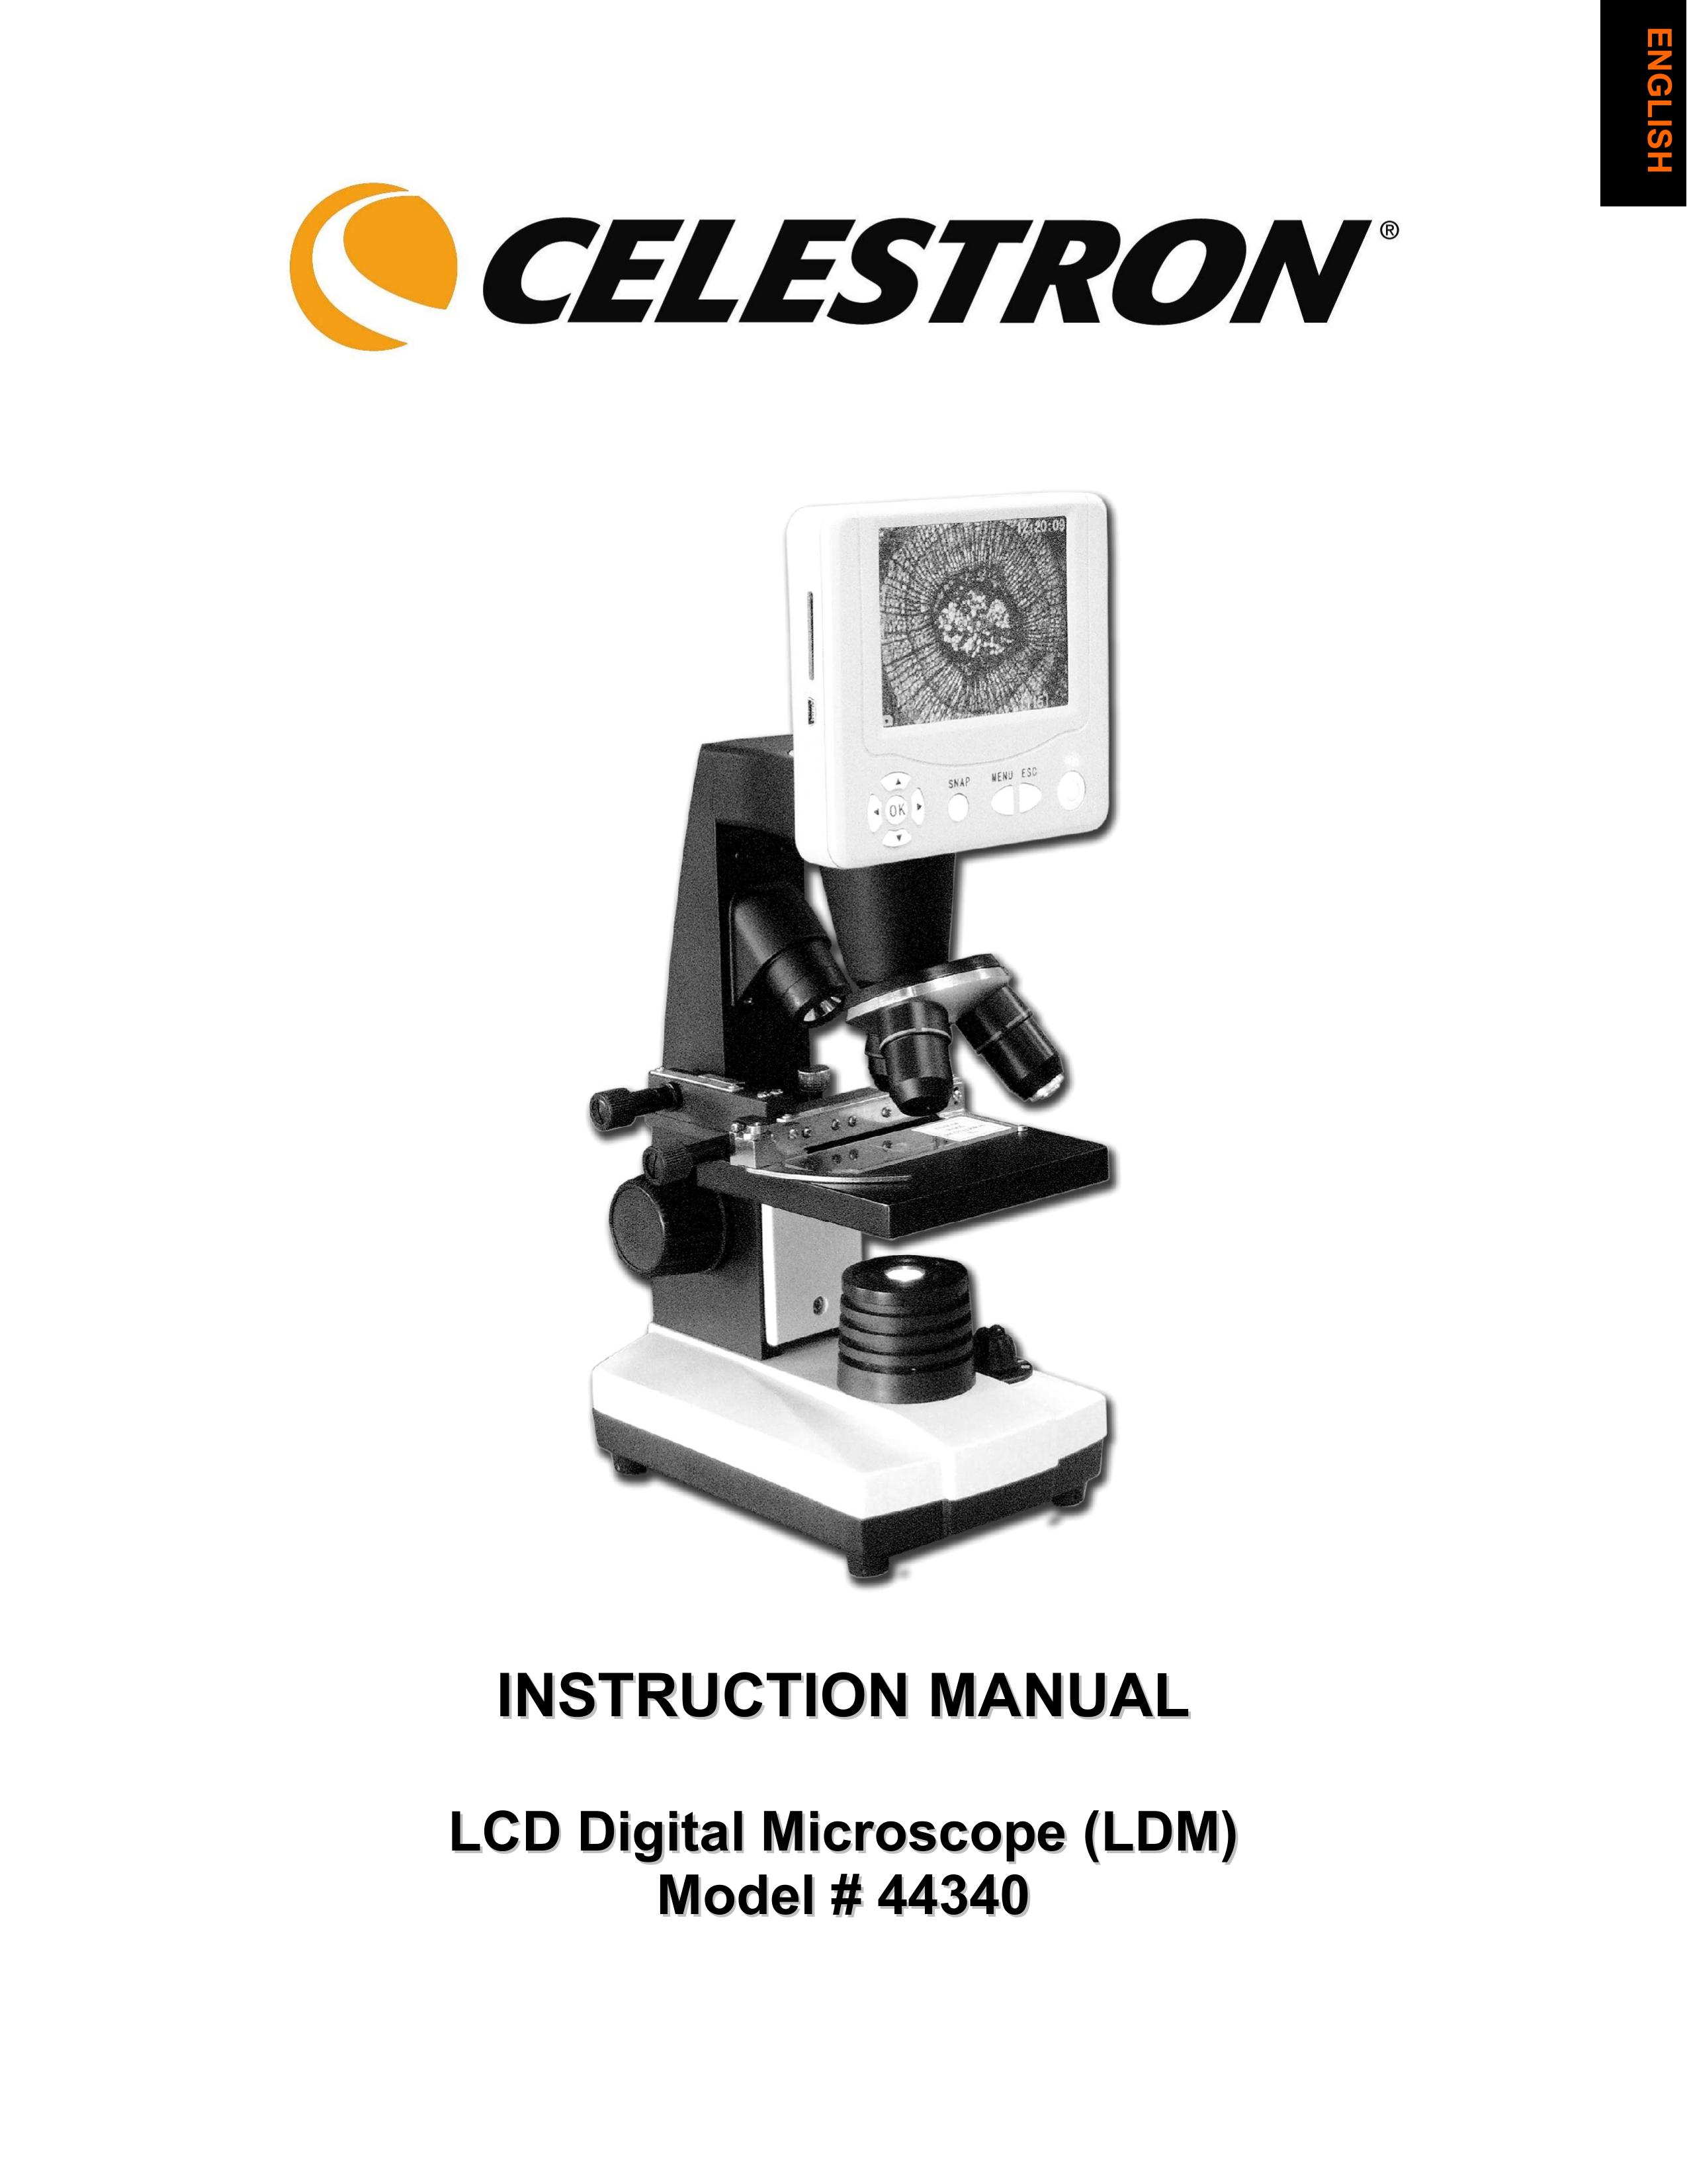 Celestron 44340 Microscope & Magnifier User Manual